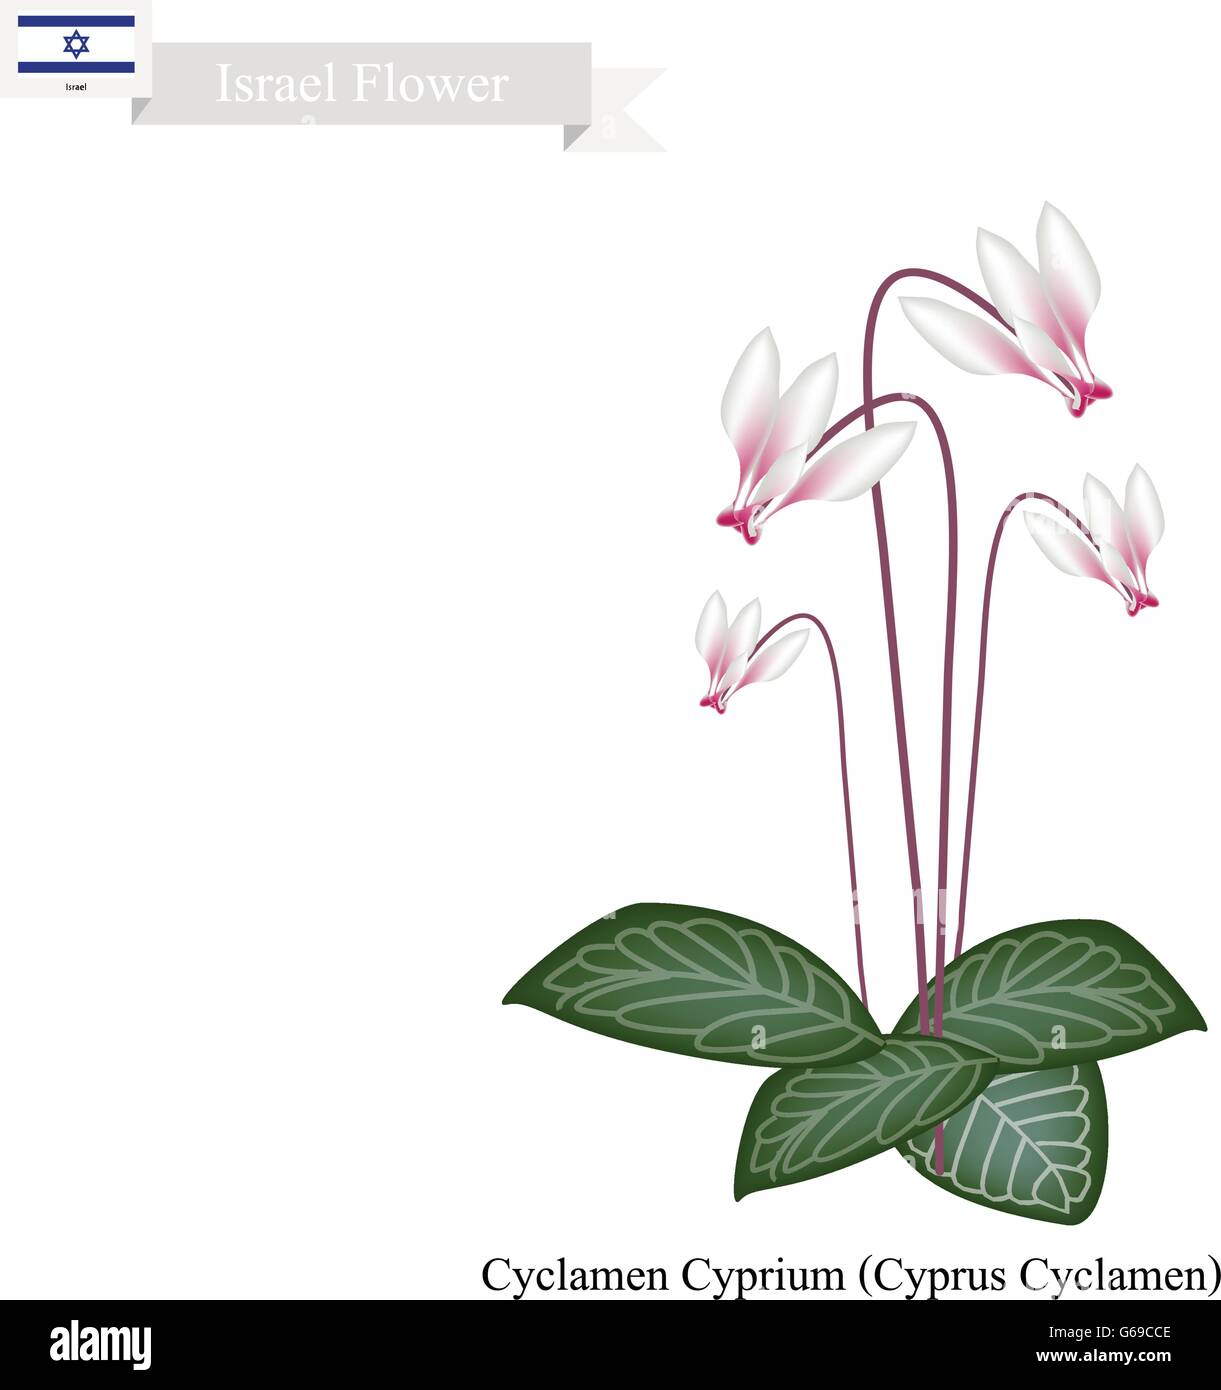 Israel Flower, Illustration of Cyclamen Cyprium Flowers or Cyprus Cyclamen Flowers. The National Flower in Israel. Stock Vector